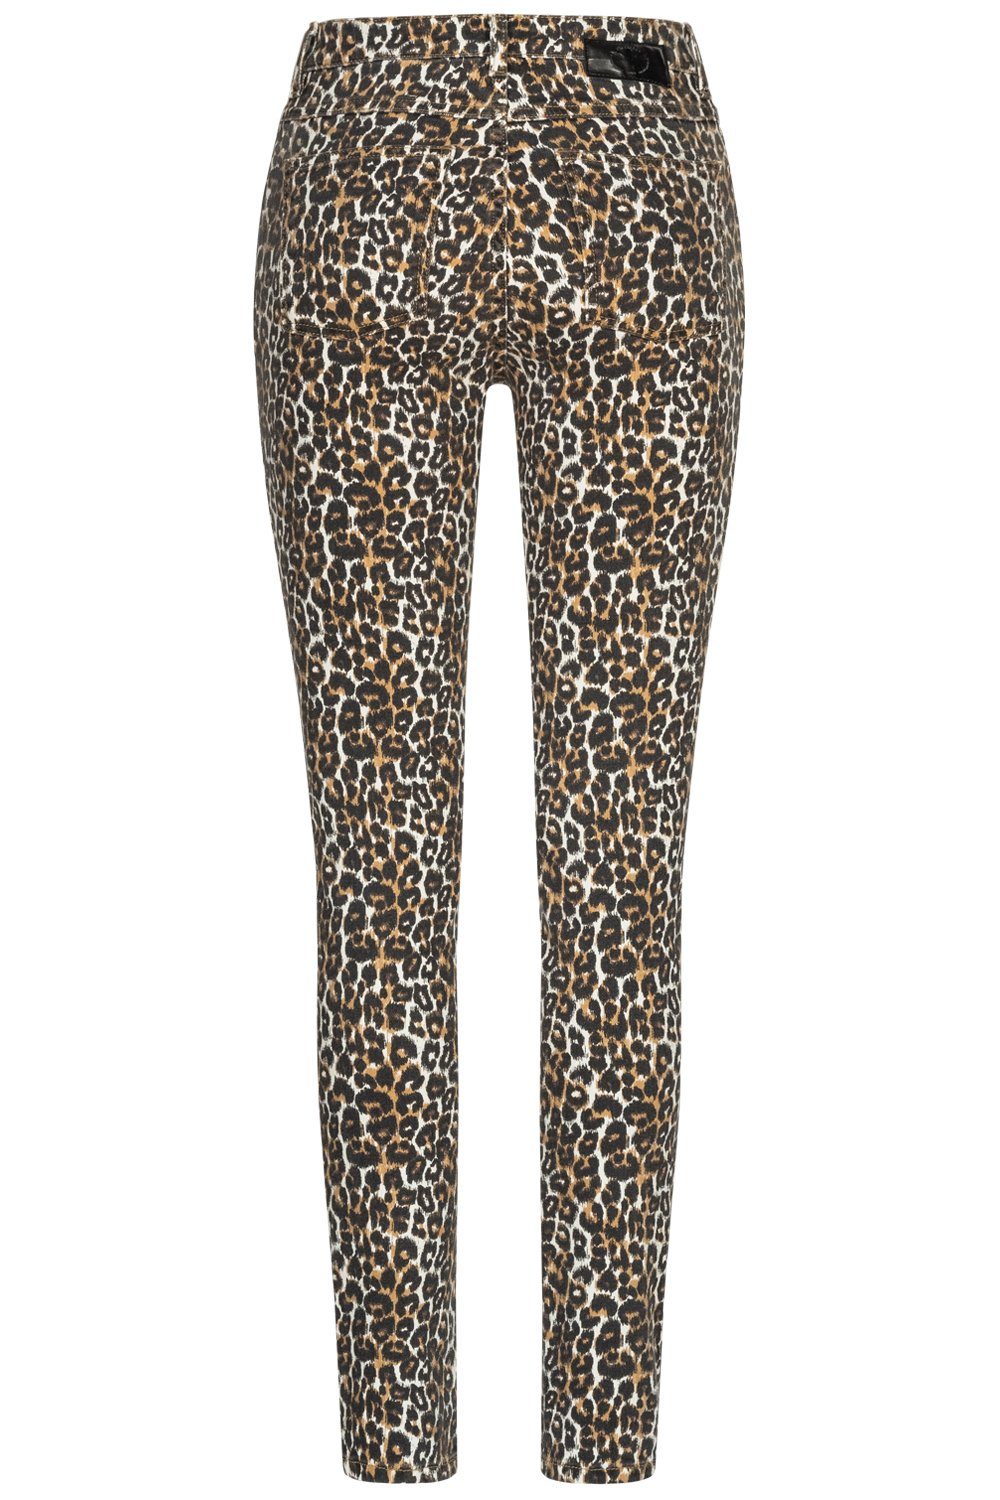 fv-Han:na, 5-Pocket-Style, Skinny-fit-Jeans Damenjeans High Waist, Feuervogl Animal, mit Wild Stretch-Anteil